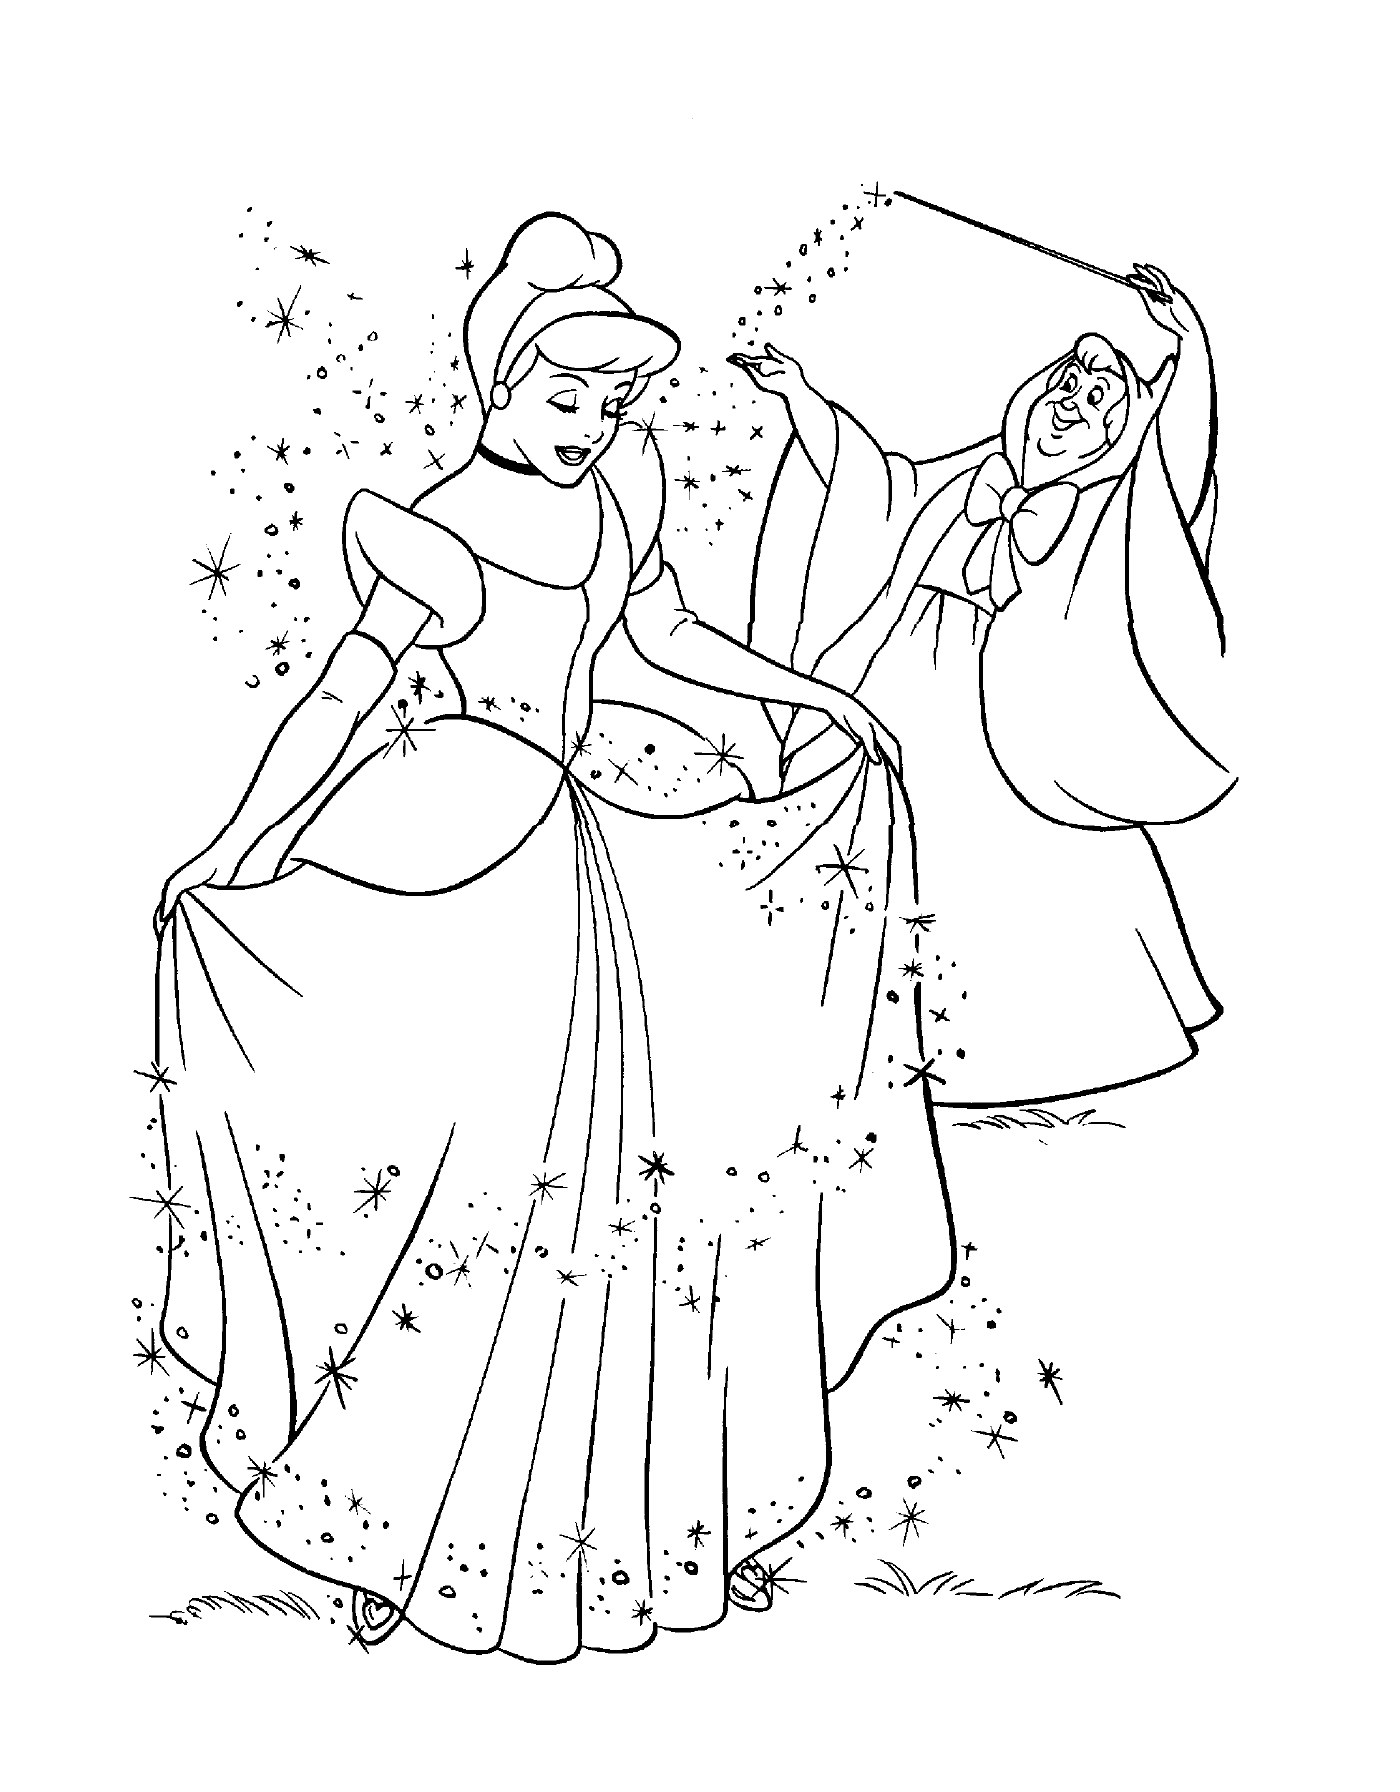  नीनी राजकुमारी, सिगराला और उसकी माँ 